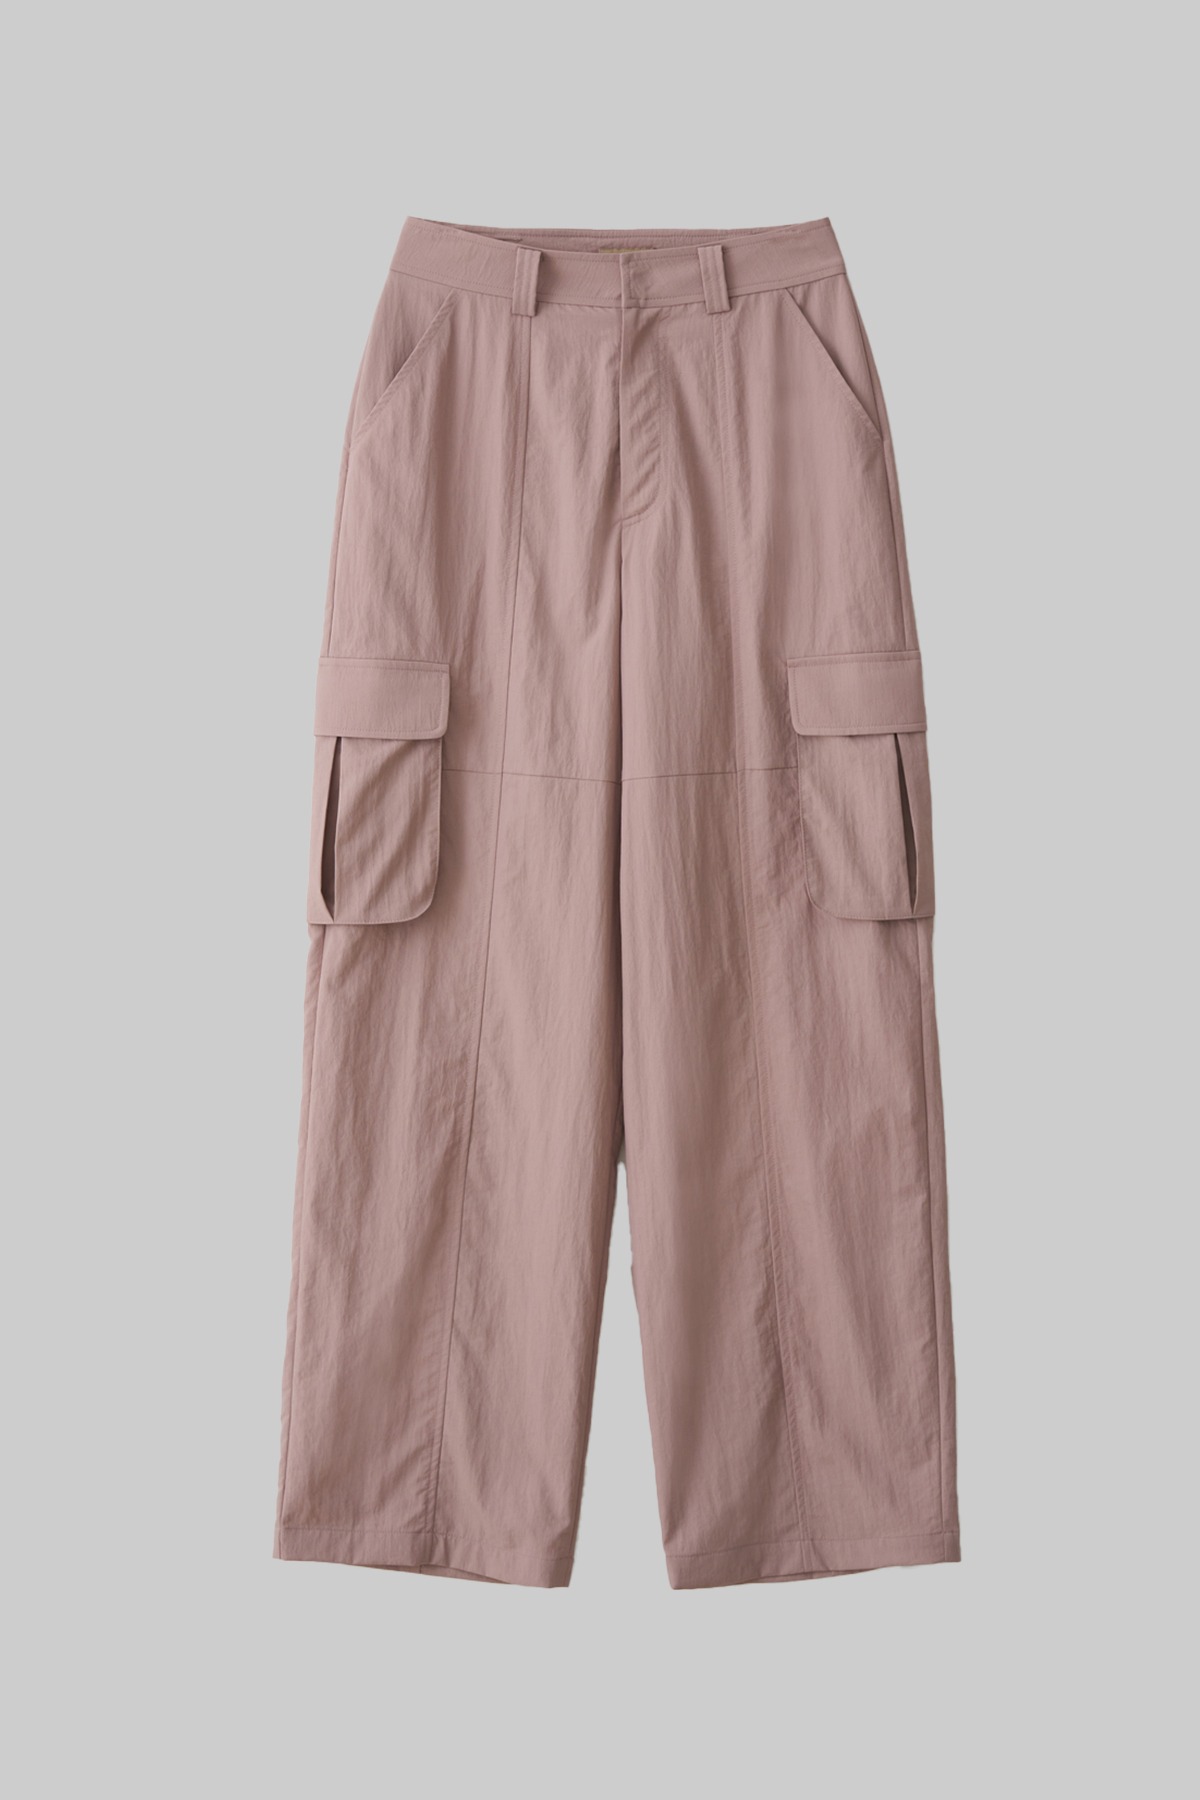 Utility cargo wide pants(dusty pink)